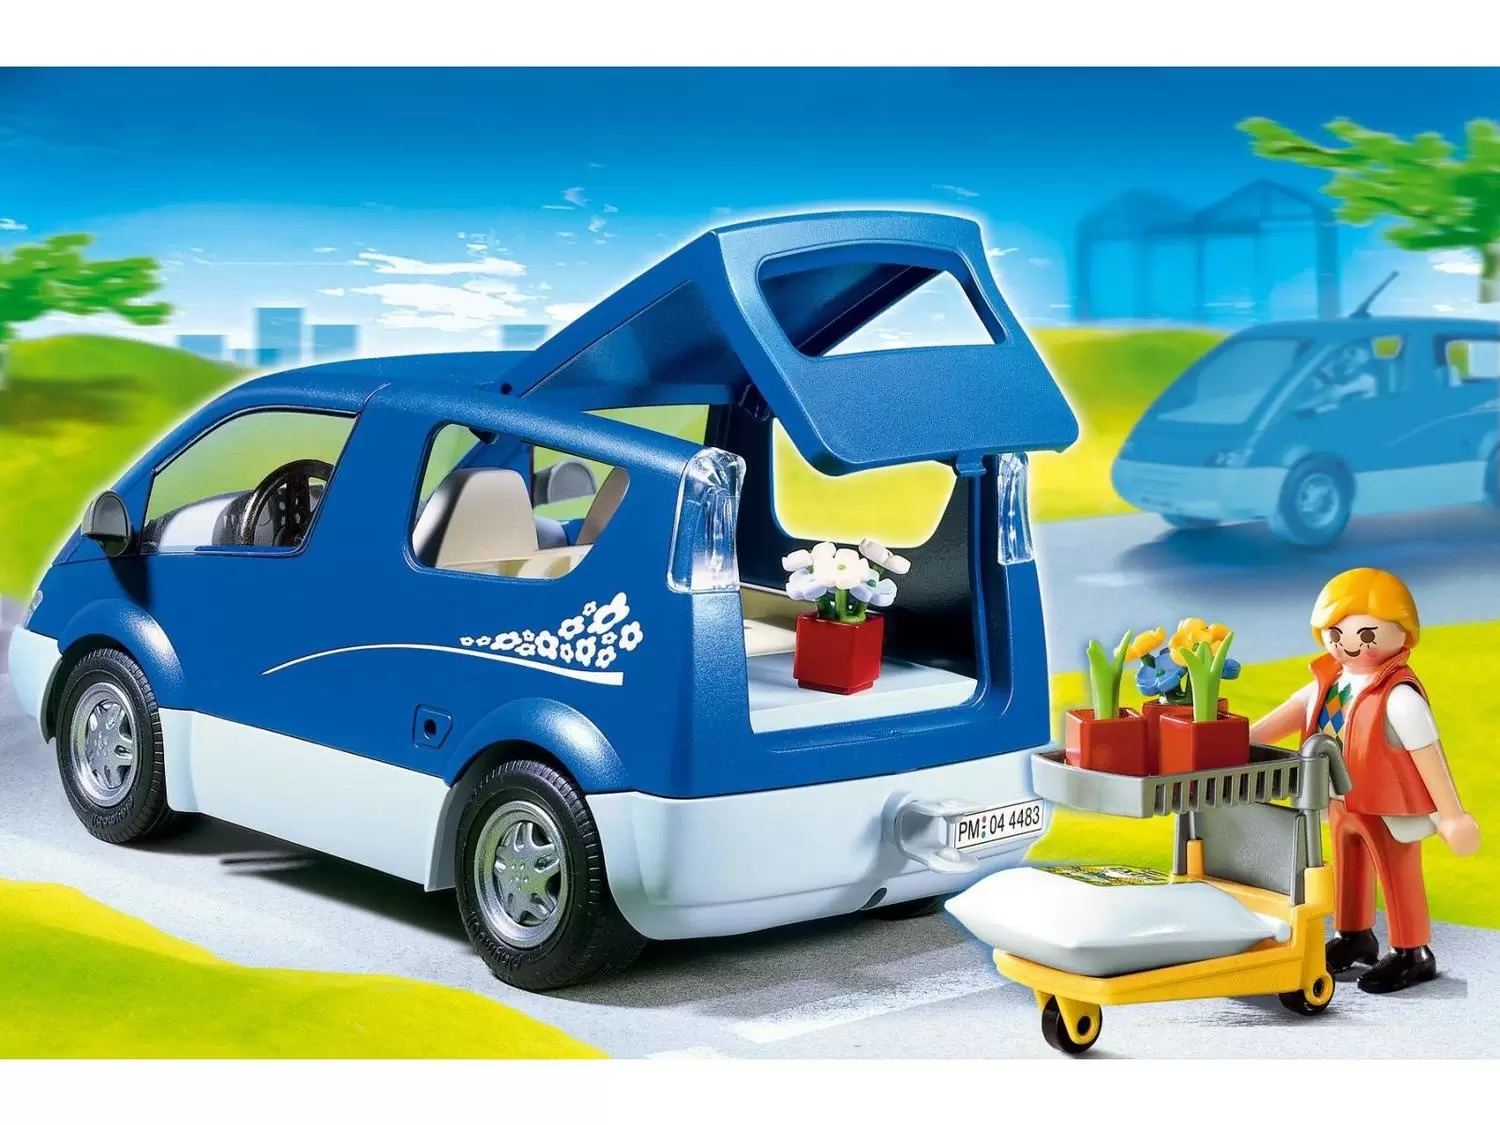 Playmobil in the City - City Van